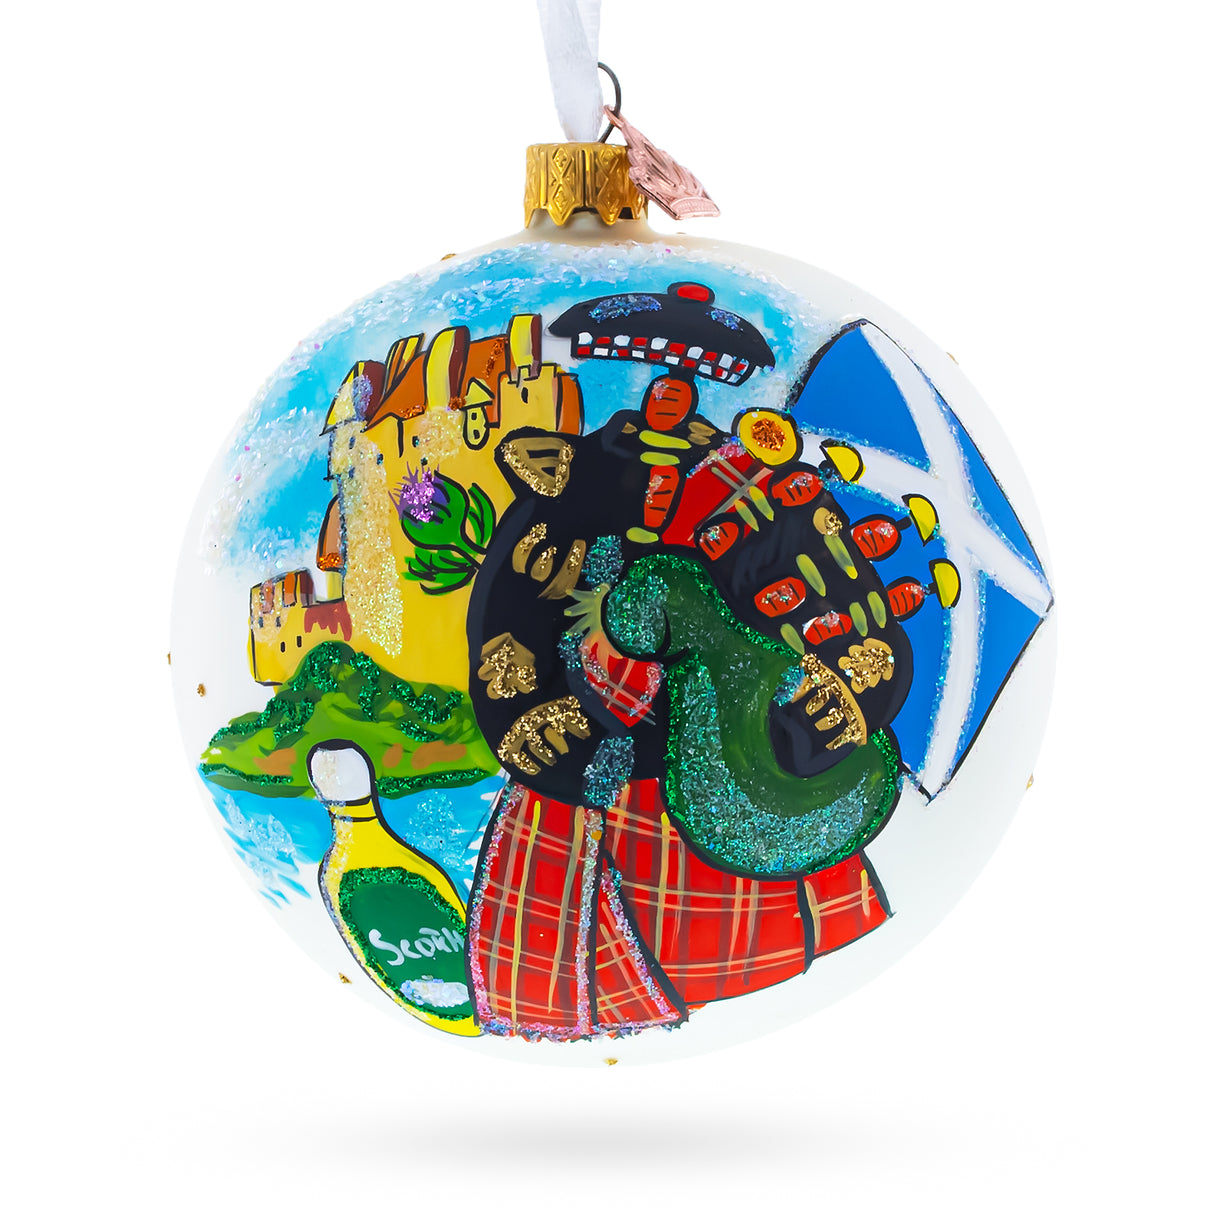 Glass Scotland, Great Britain Glass Ball Christmas Ornament 4 Inches in Multi color Round